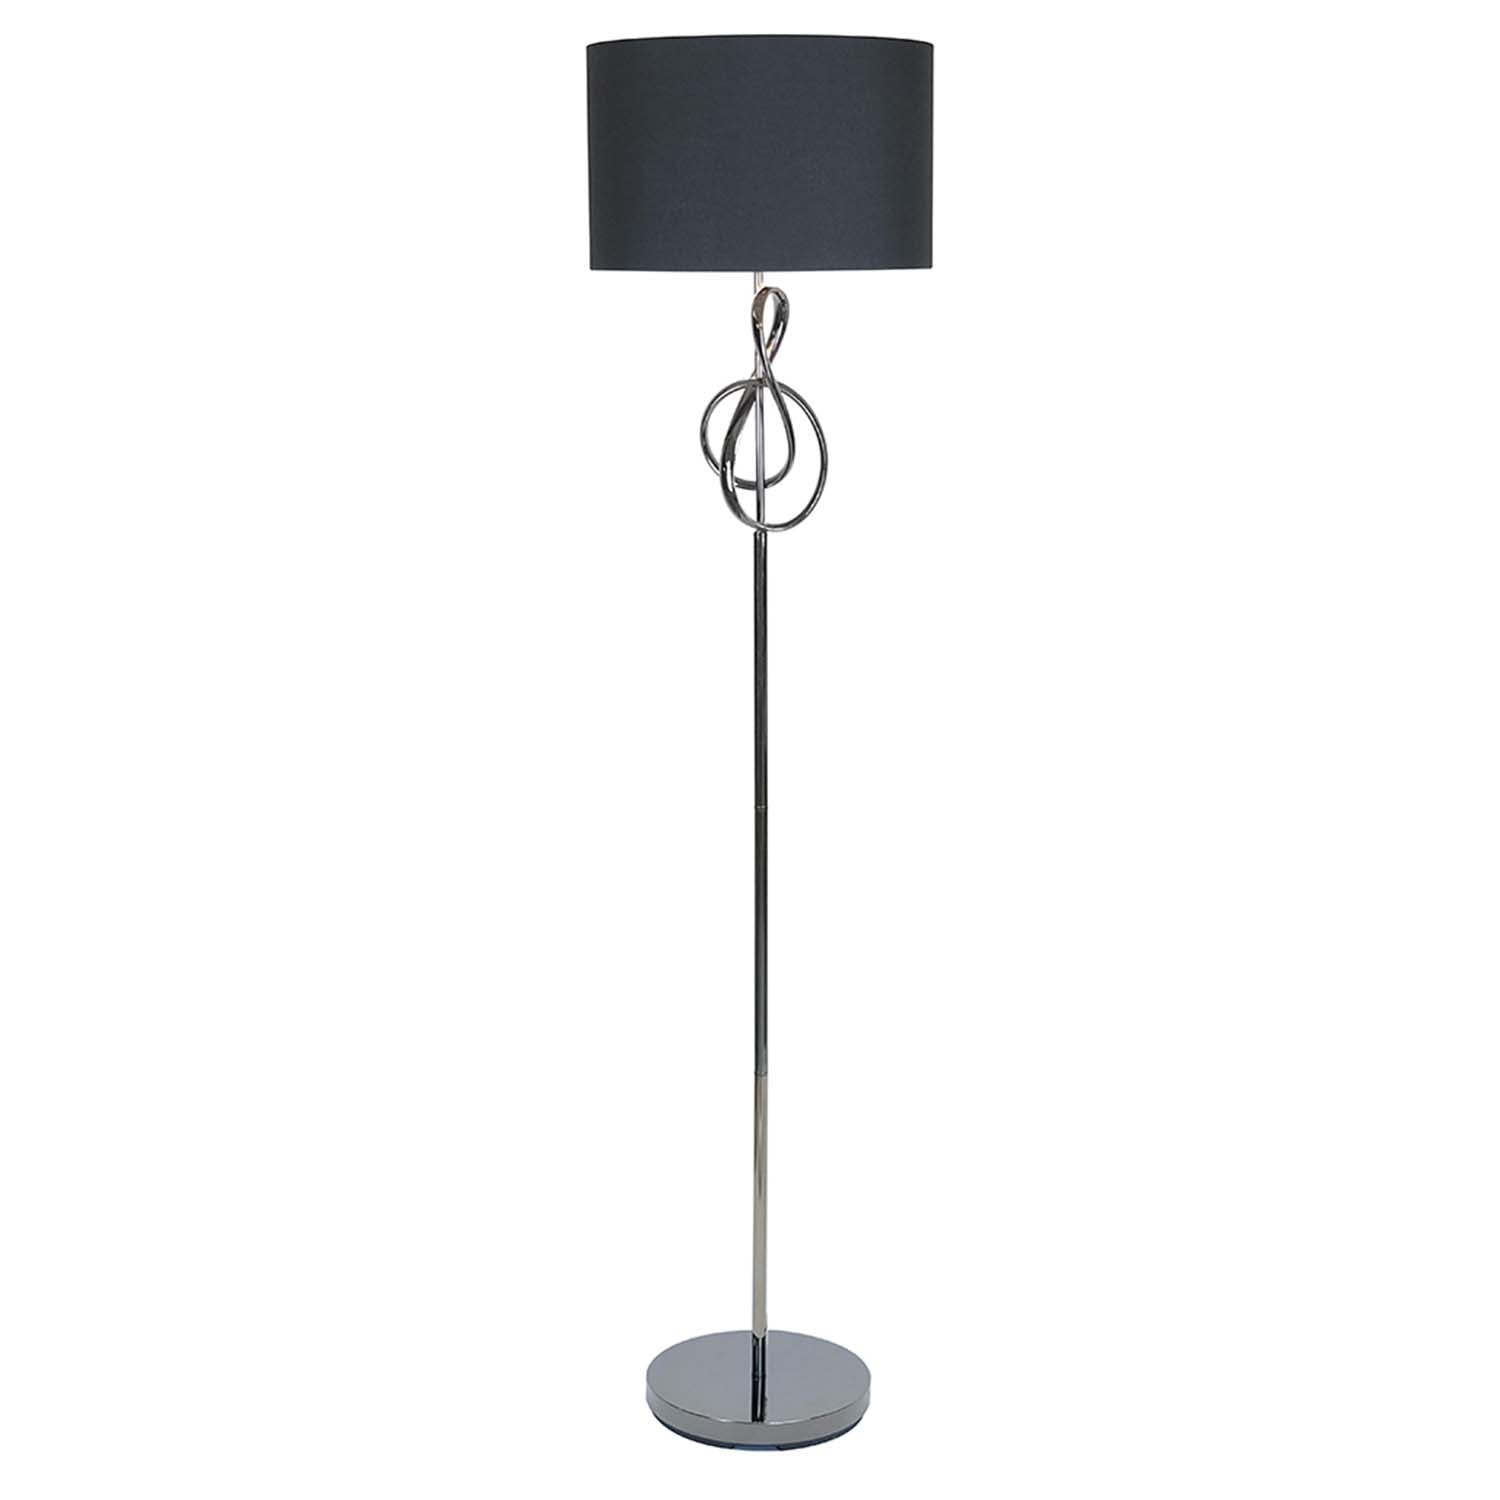 159cm G-Clef Design Black Linen Shade Floor Lamp